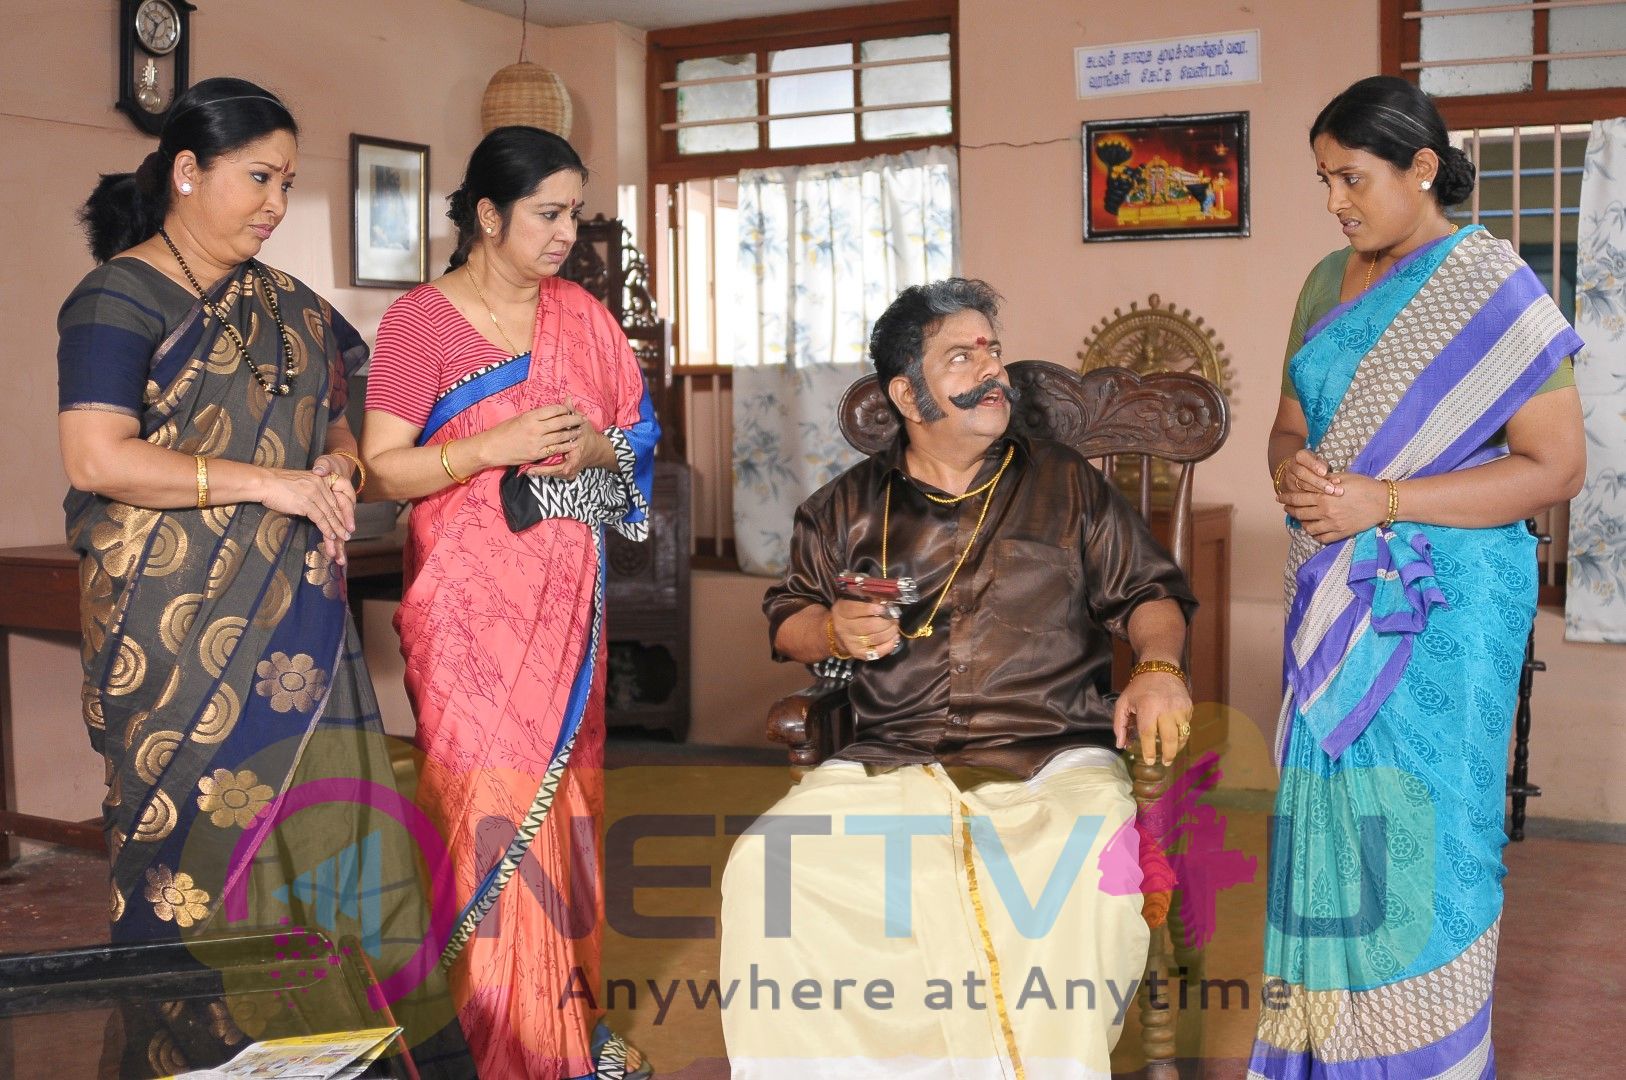 Idly Tamil Movie Realeasing Worldwide On June 29 Exclusive Stills Tamil Gallery